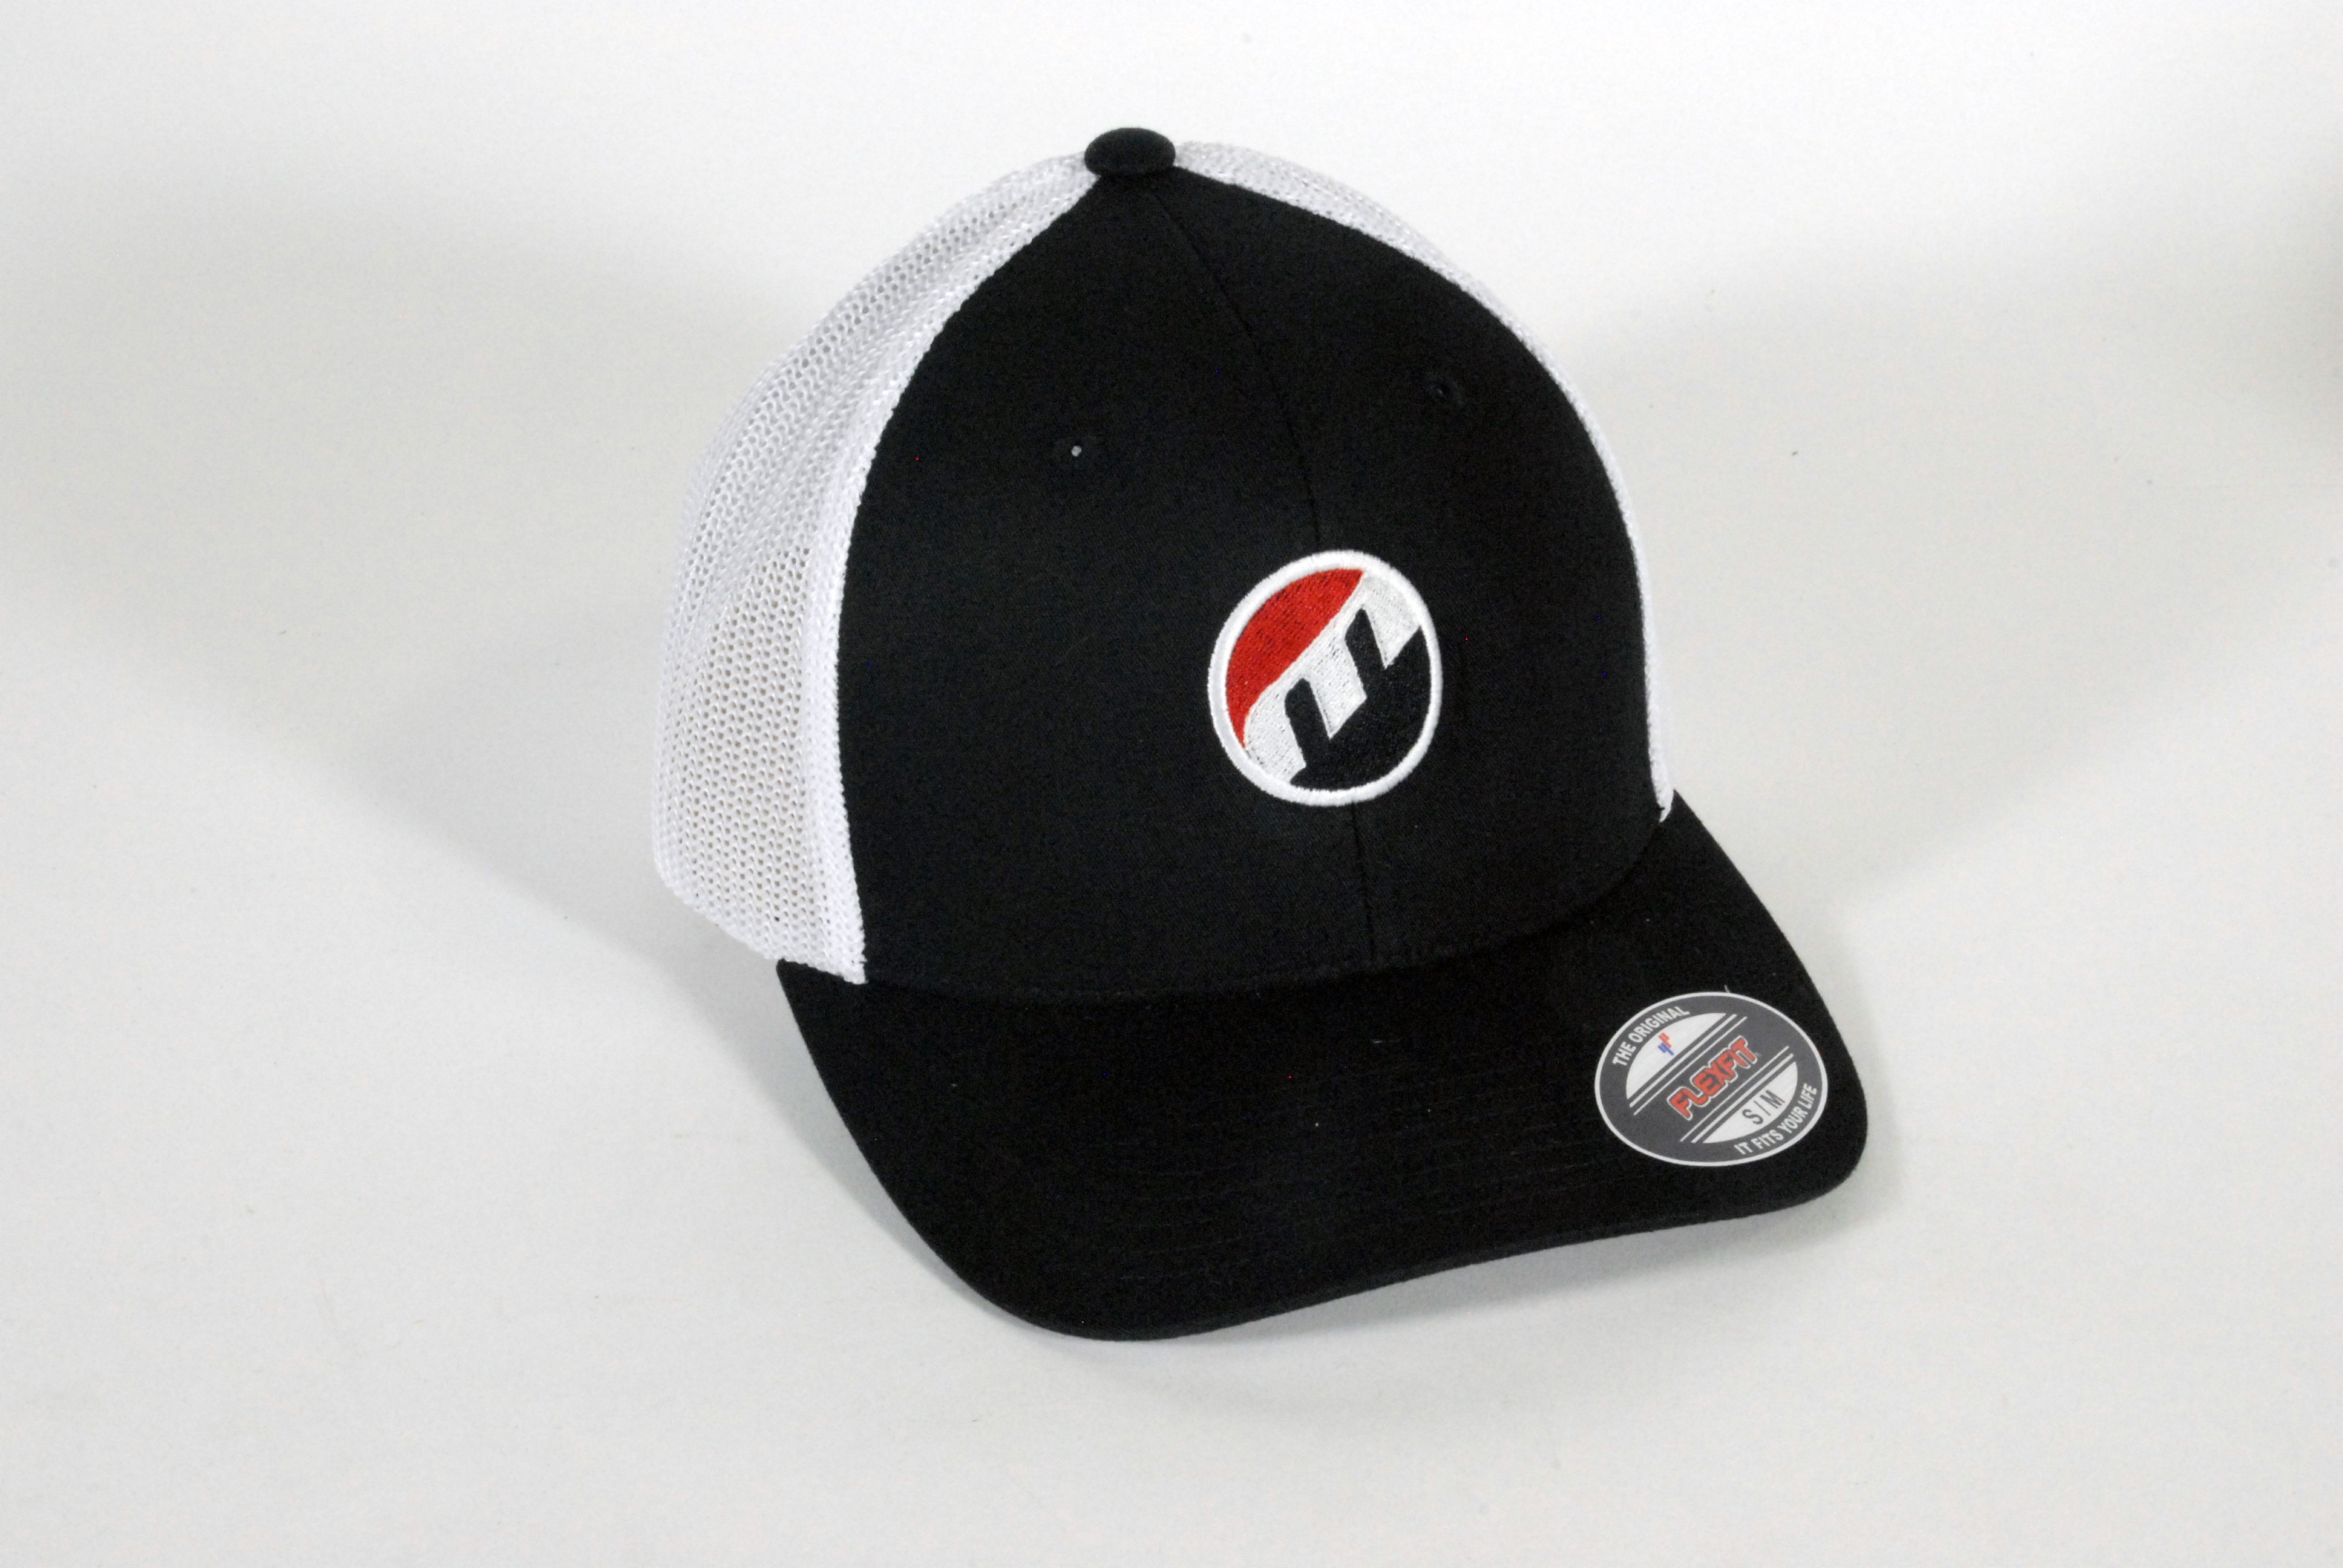 Hat 06 - Black Hat w/red trim